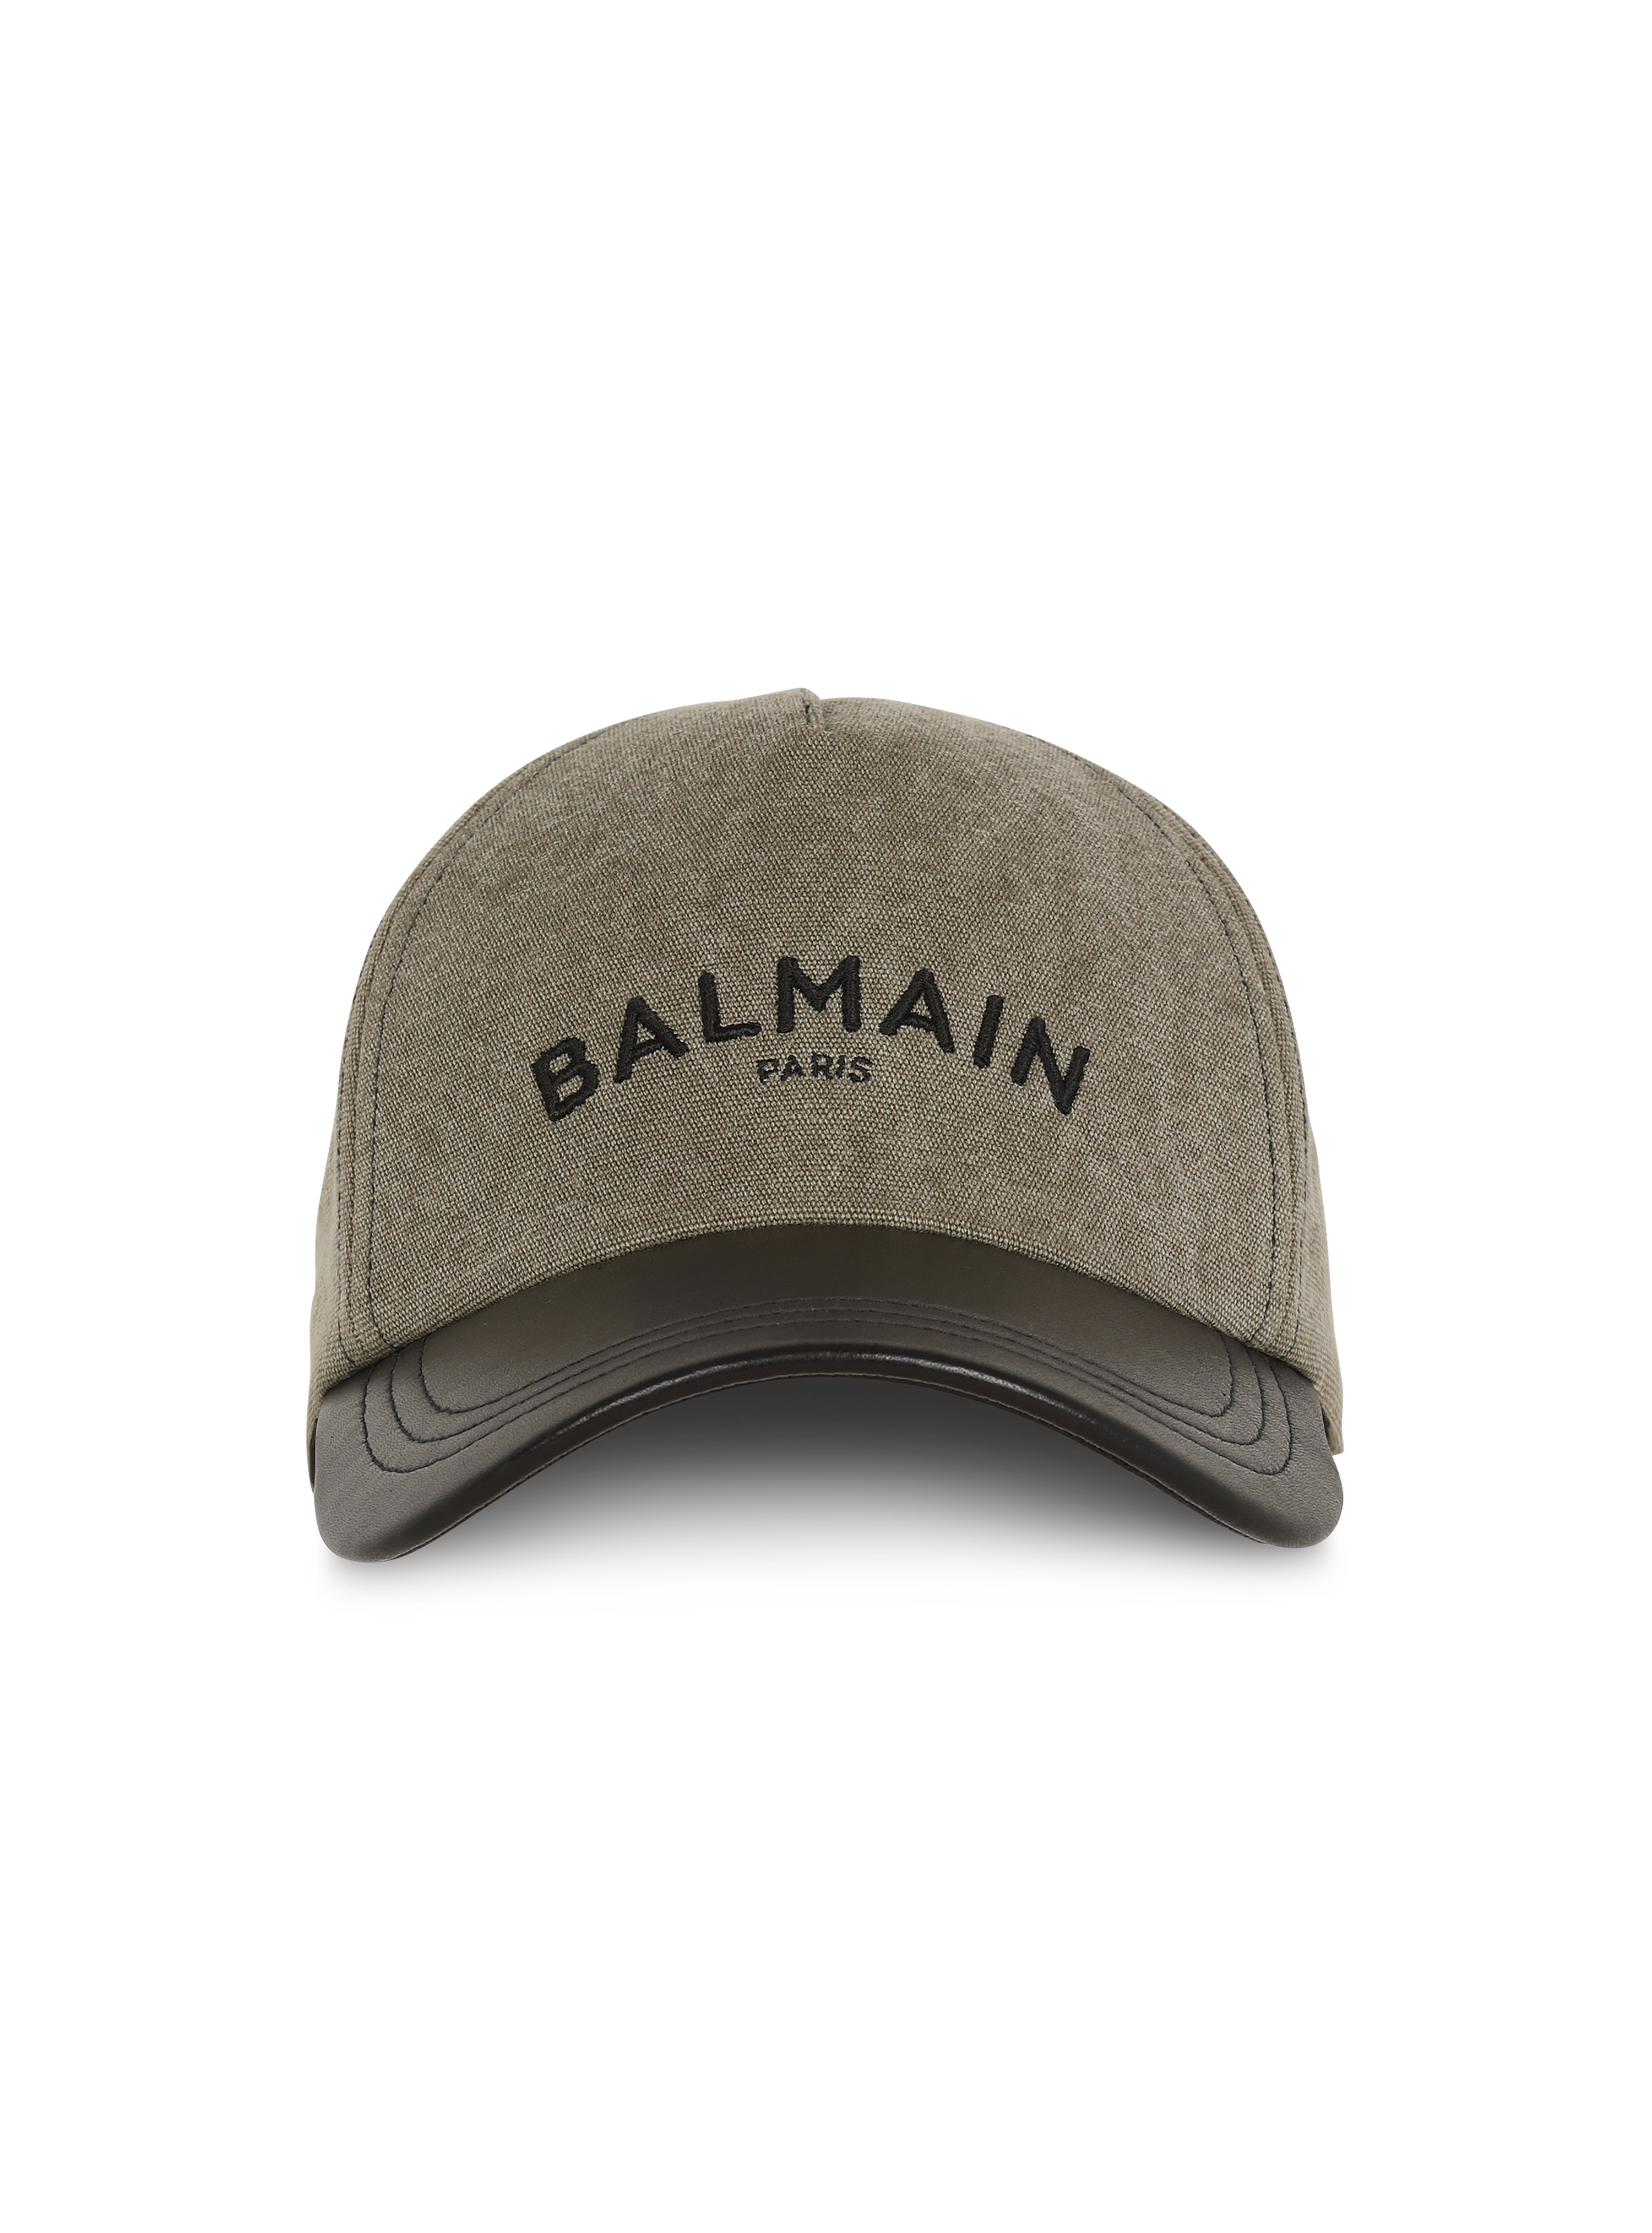 Balmain巴尔曼标志棉质棒球帽, khaki